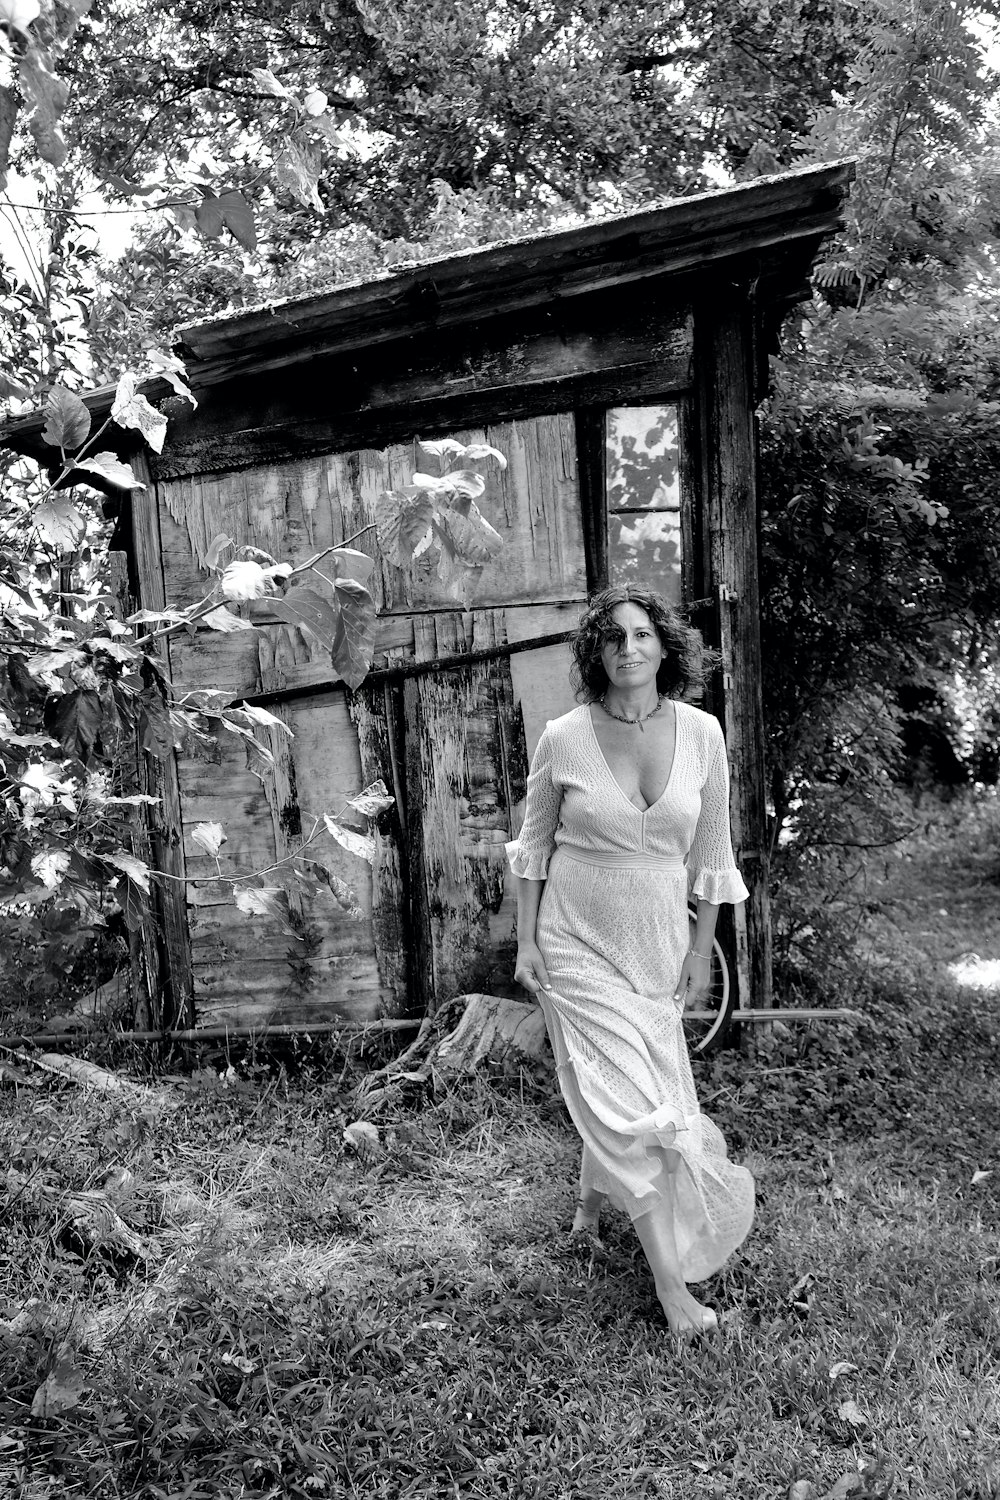 a woman in a long dress walking past a shack